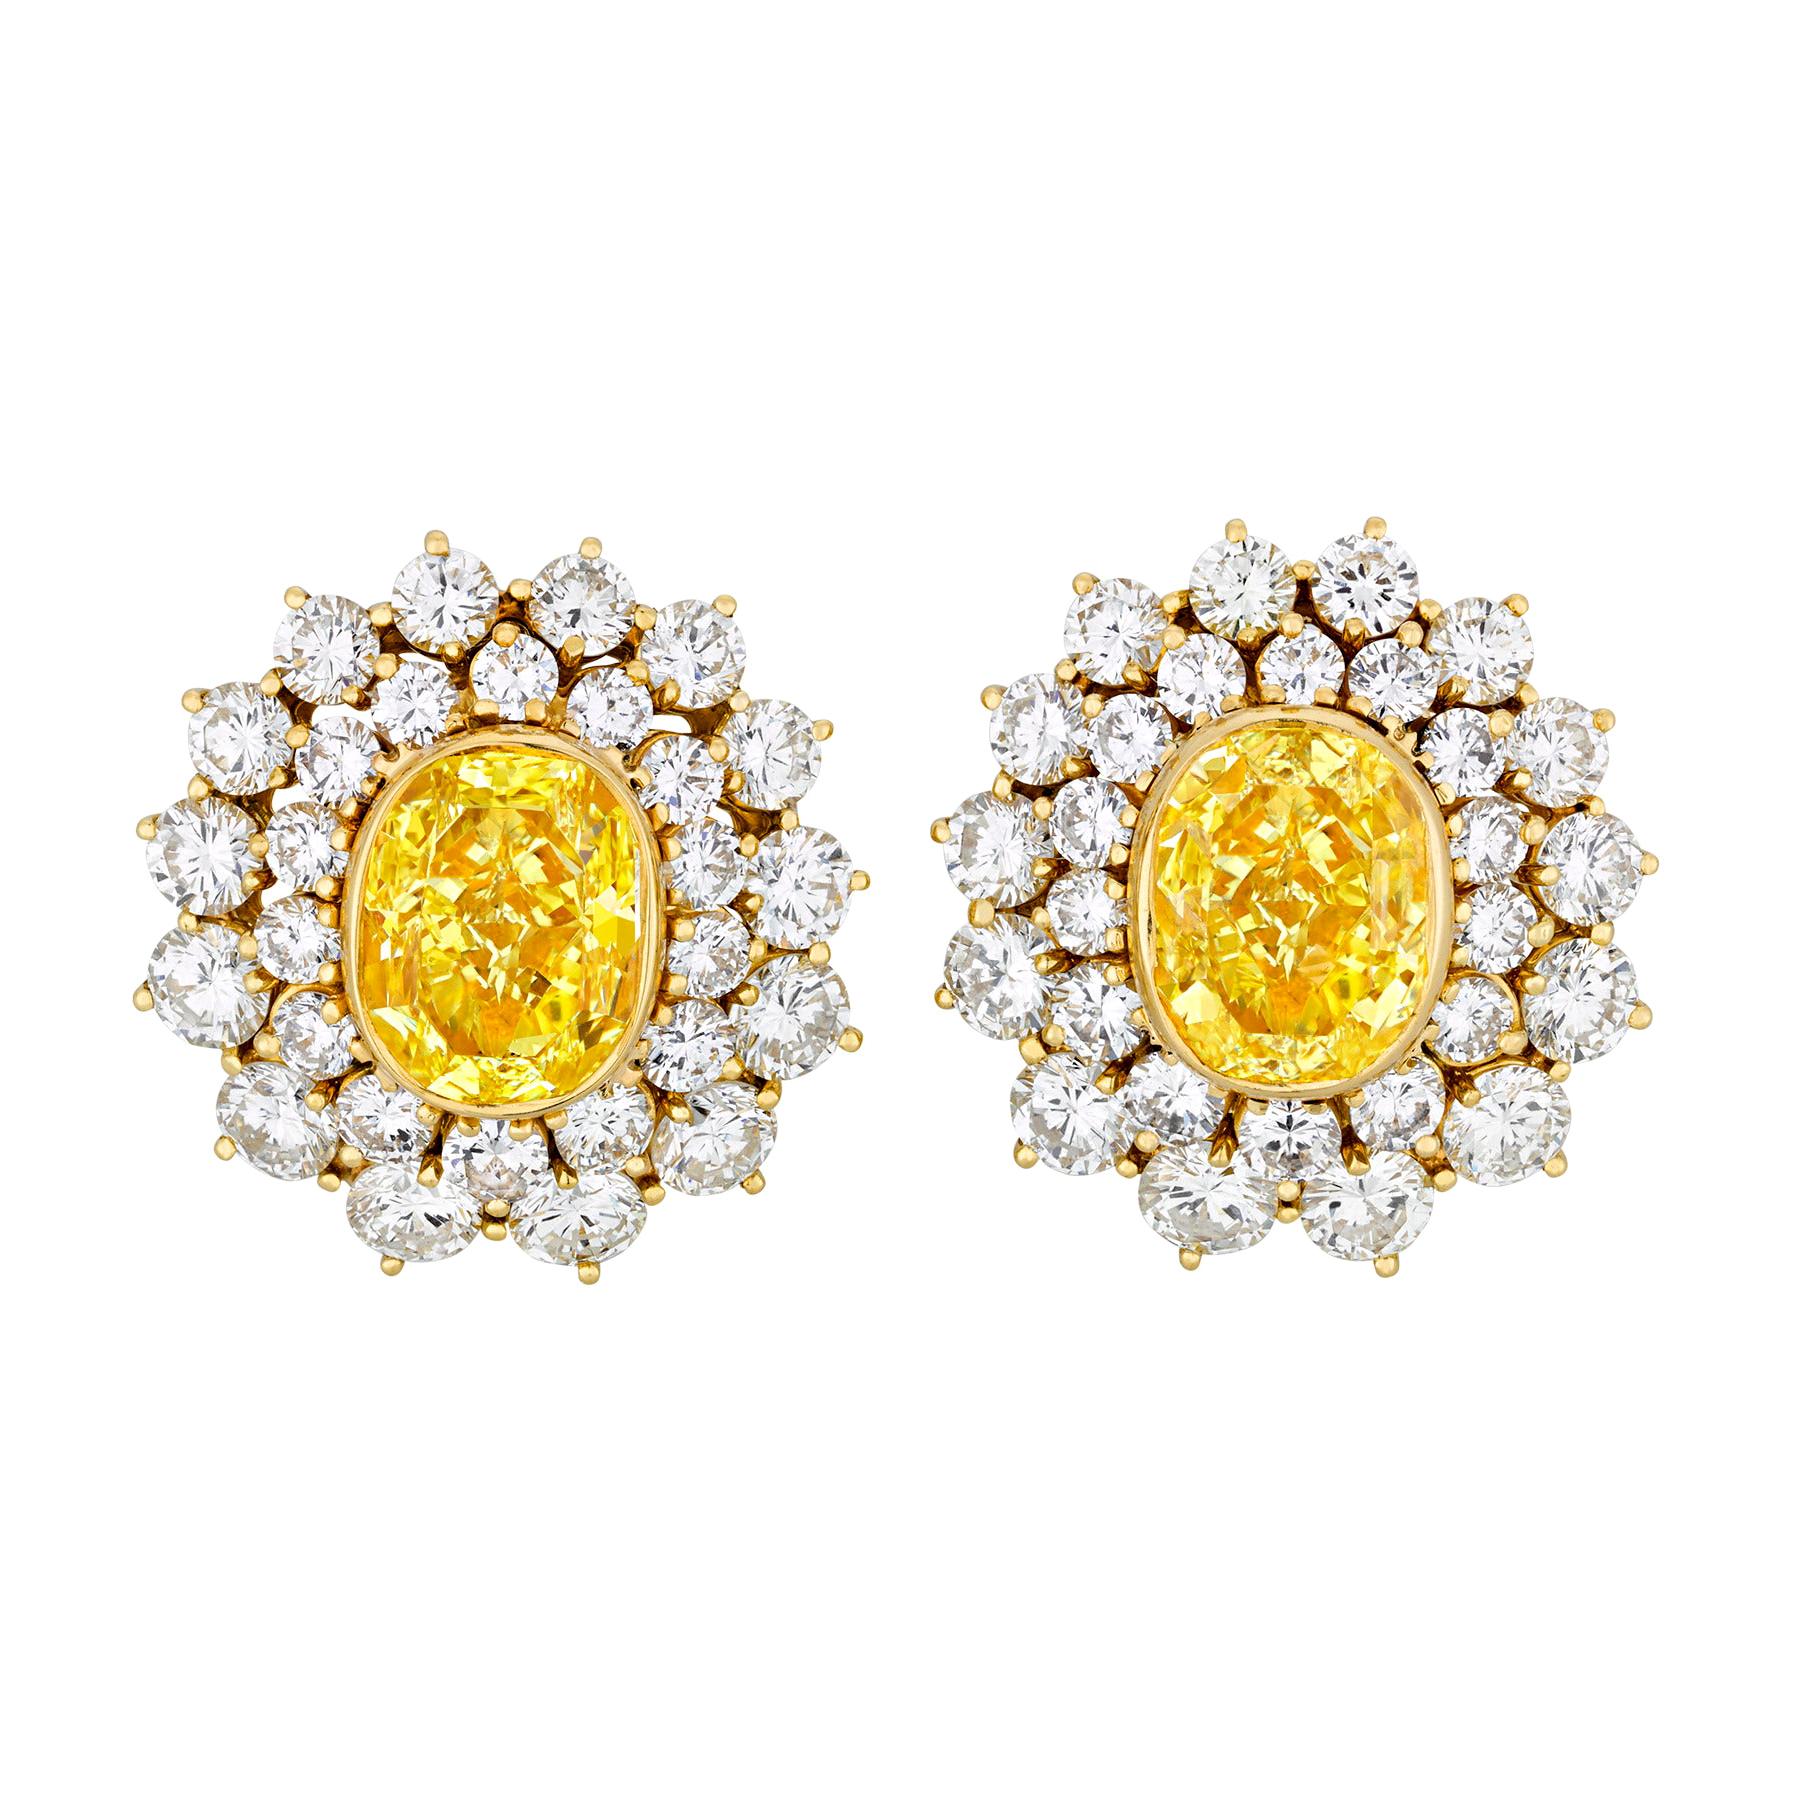 Fancy Intense Yellow Diamond Convertible Earrings, 11.36 Carat